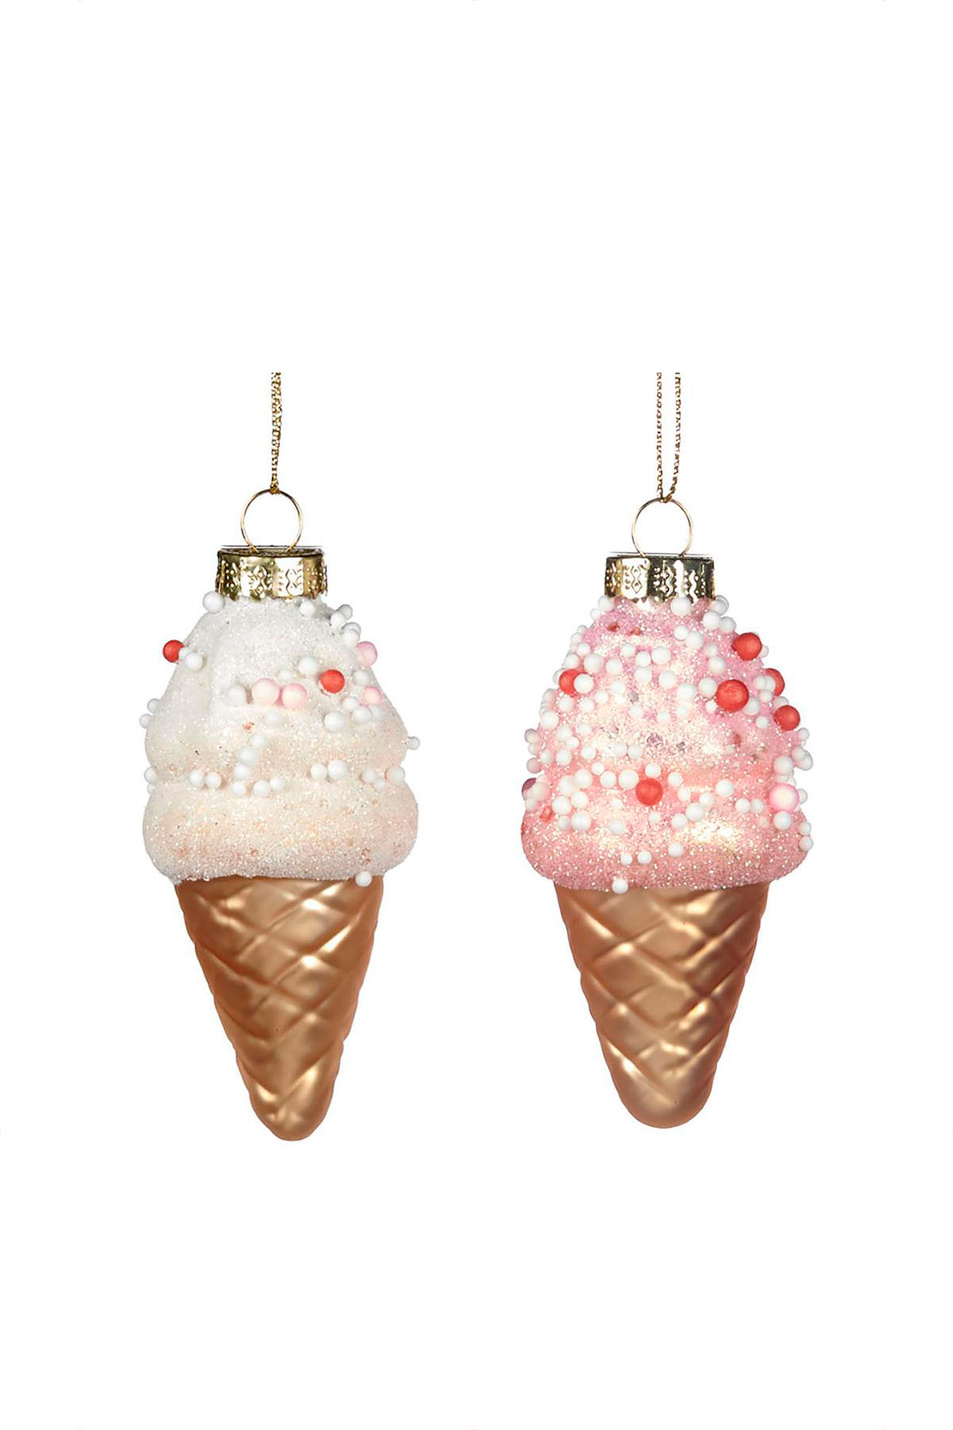 Goodwill Елочная игрушка "Мороженое", 8 см (цвет ), артикул P 34056 | Фото 1